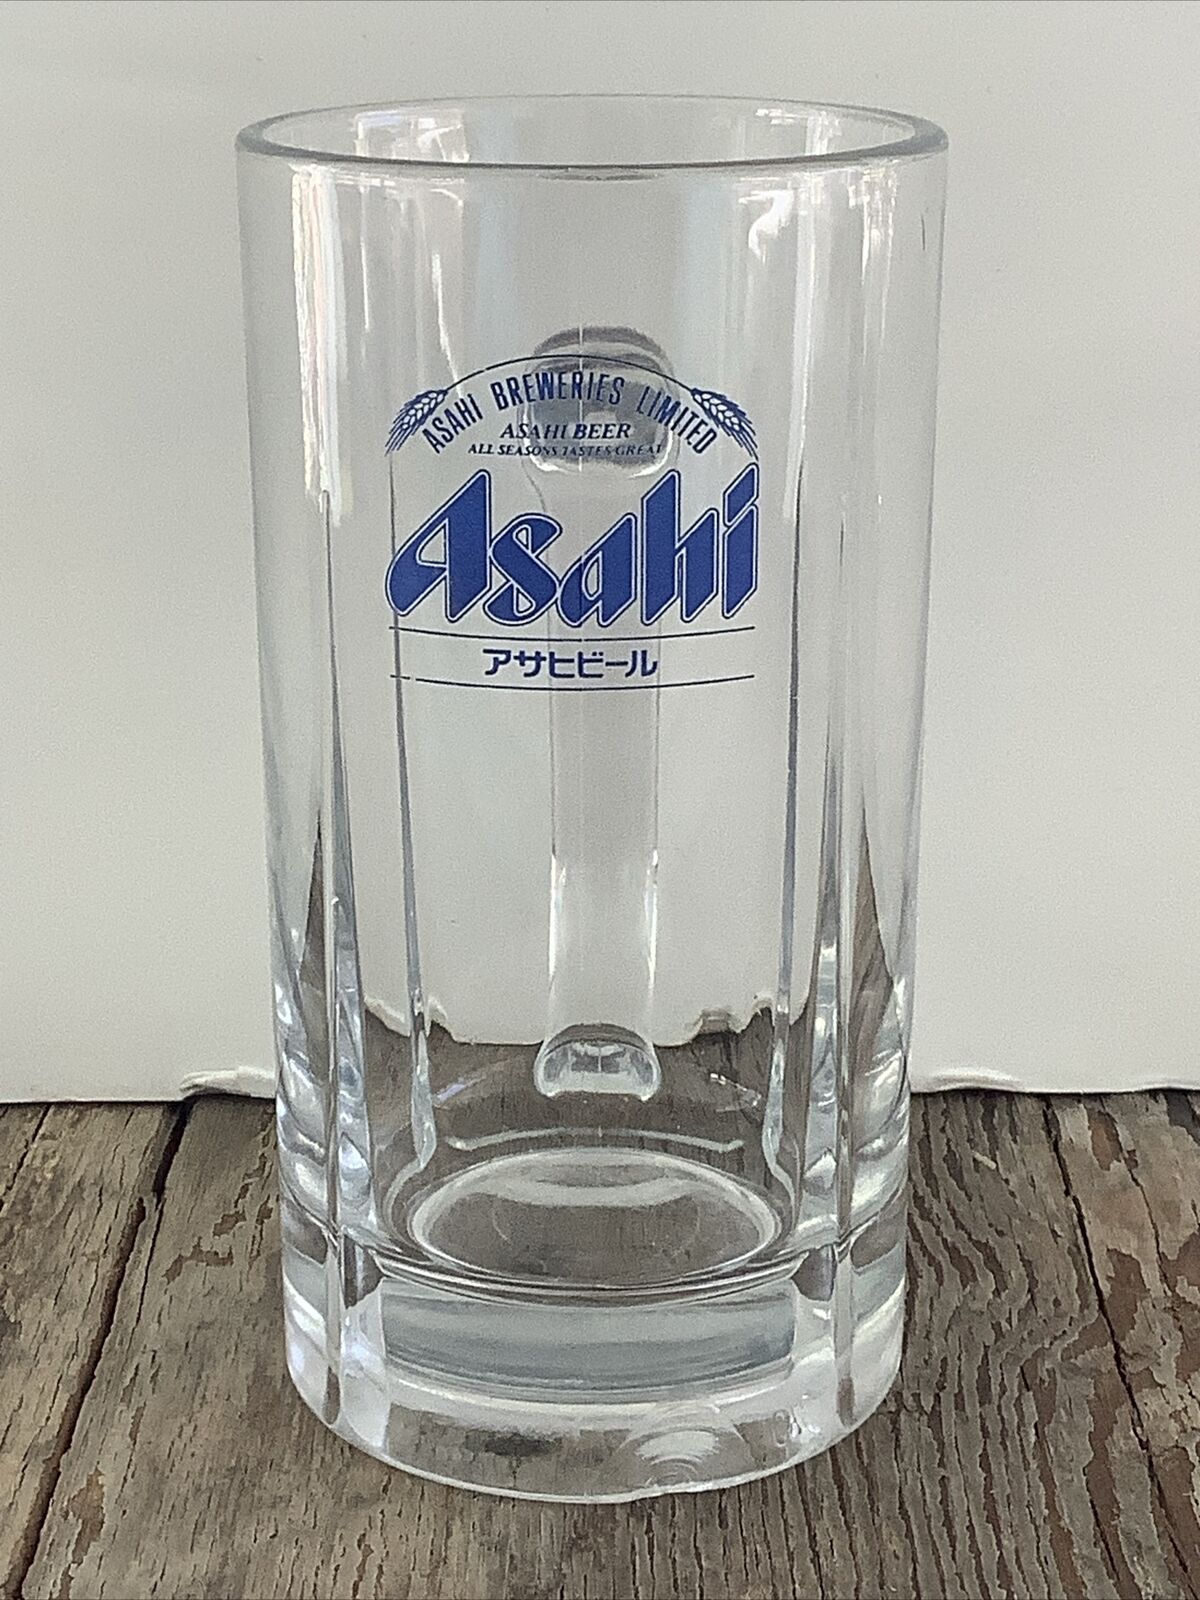 Asahi Beer Mug 12oz Japanese Brewery Collectible Blue Print Logo Drinking Glass